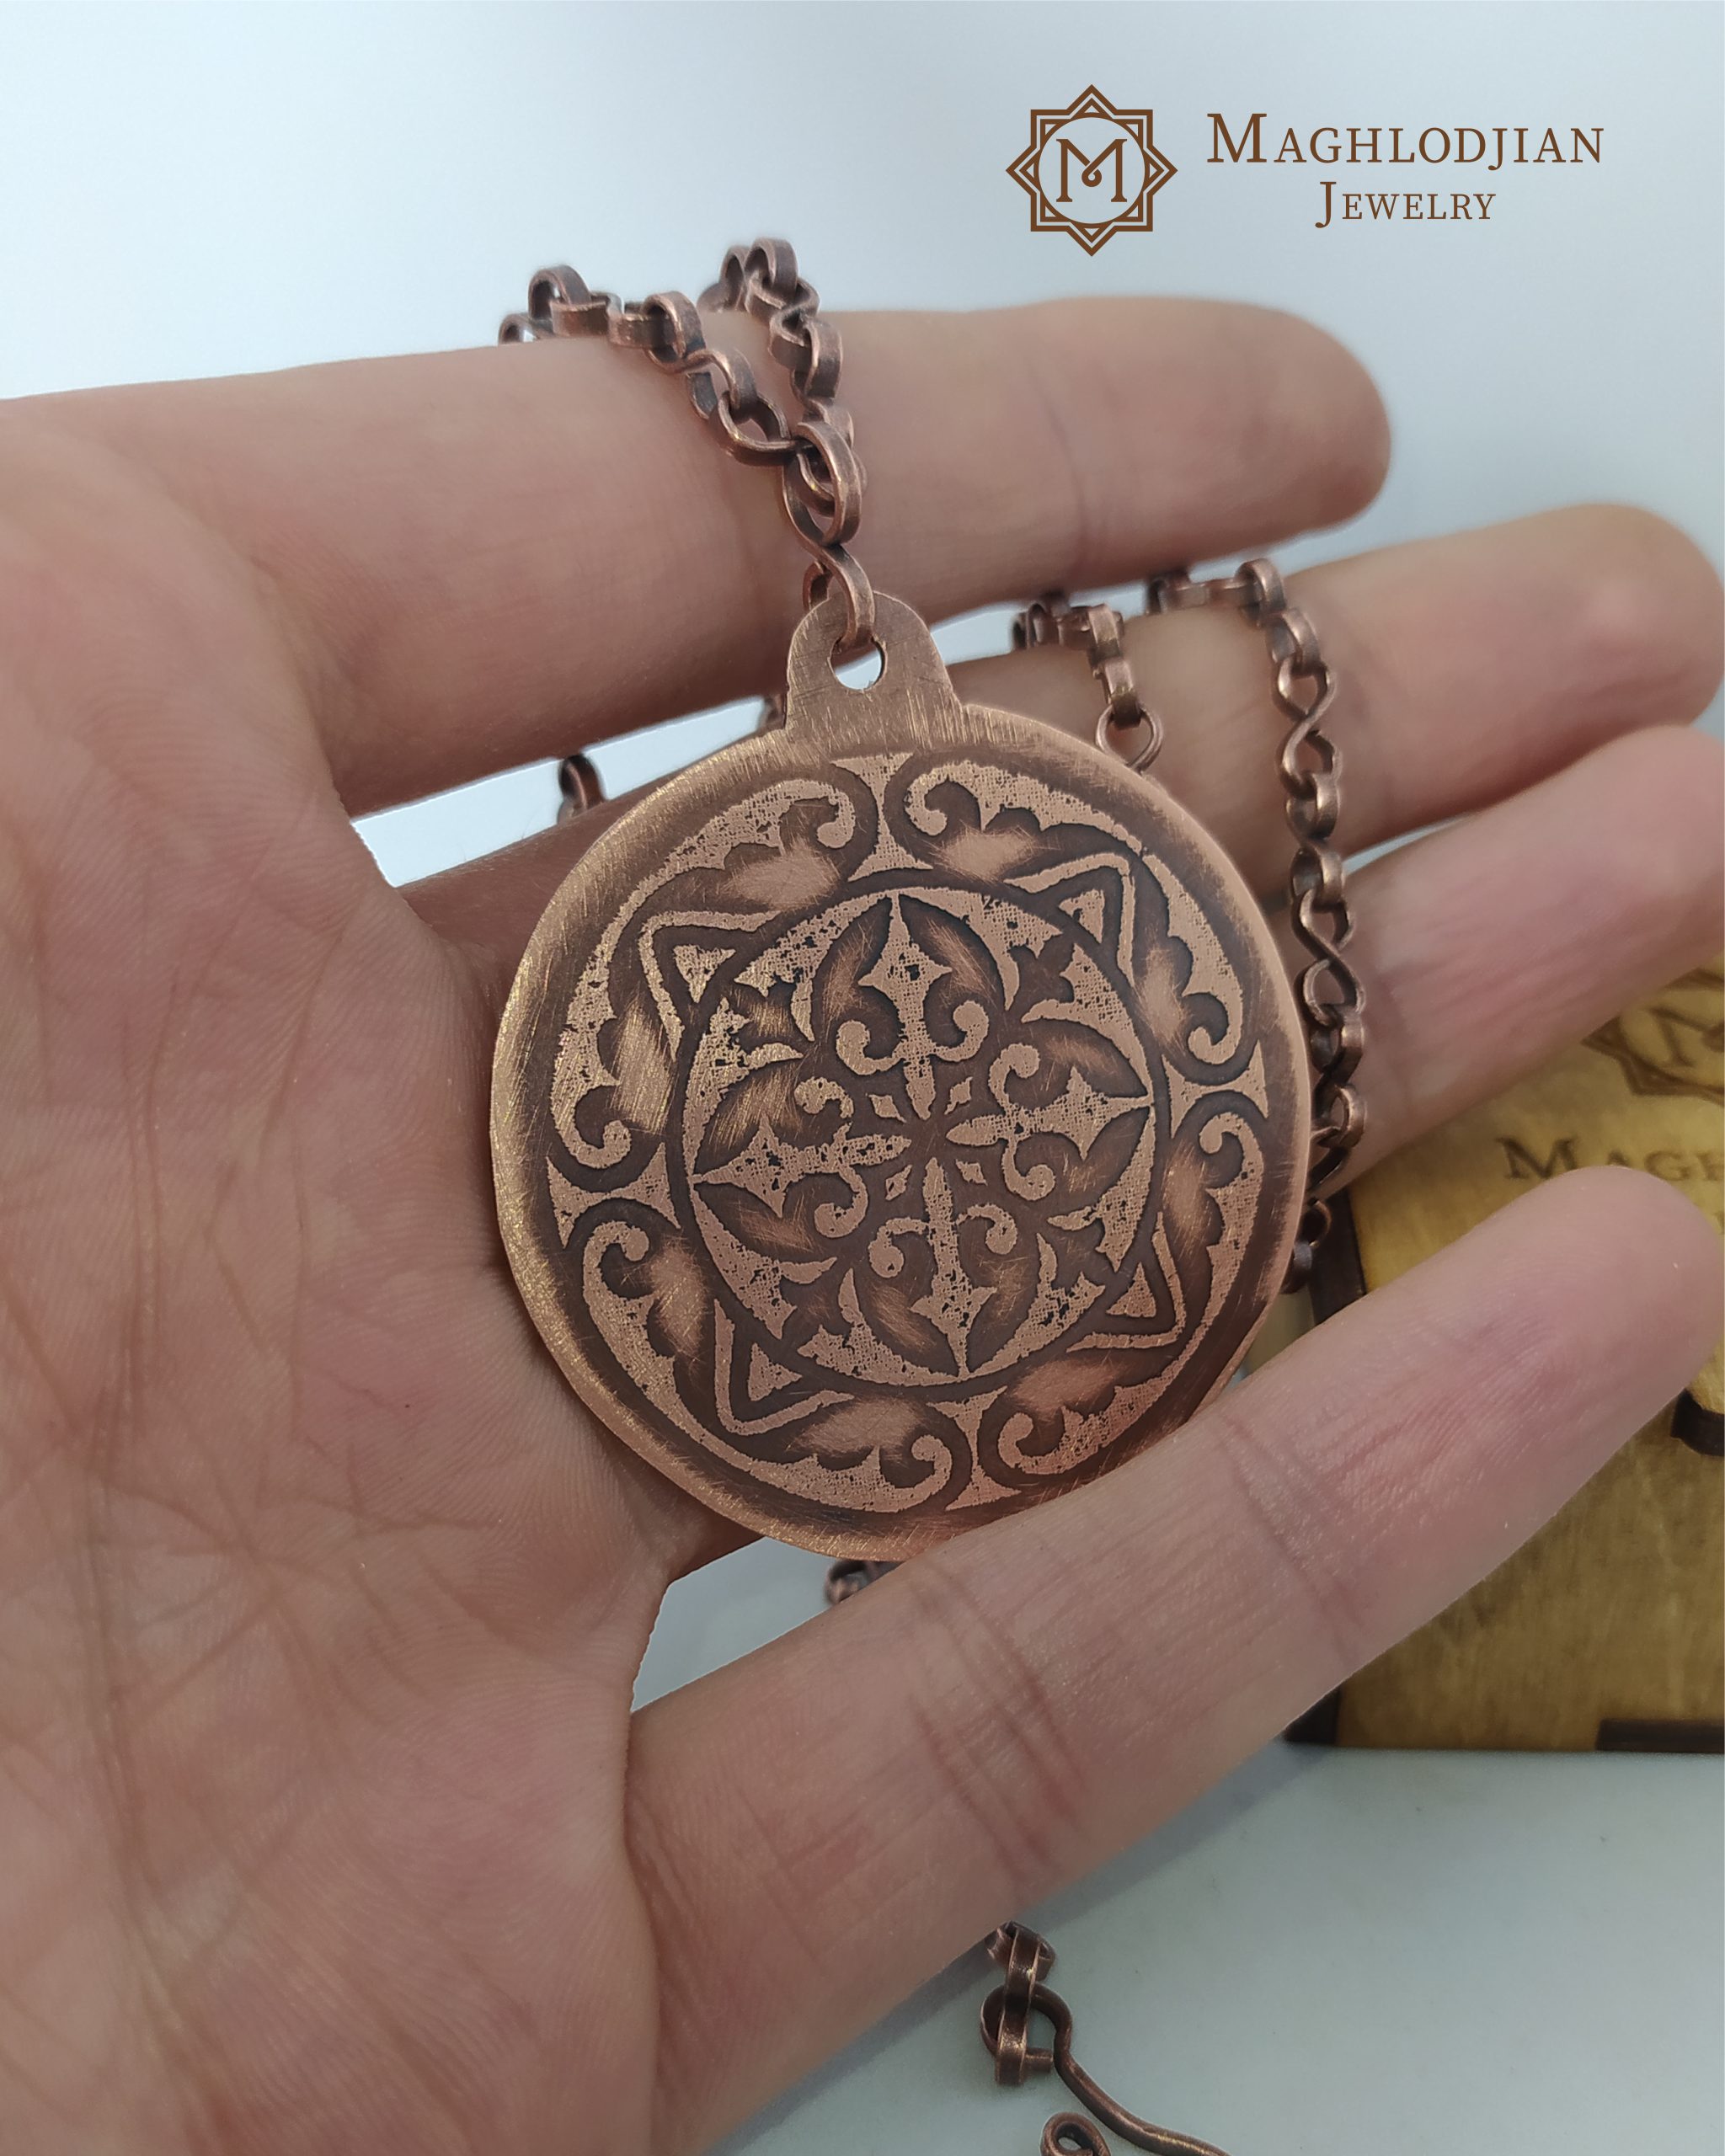 Original pendant with beautiful ornaments